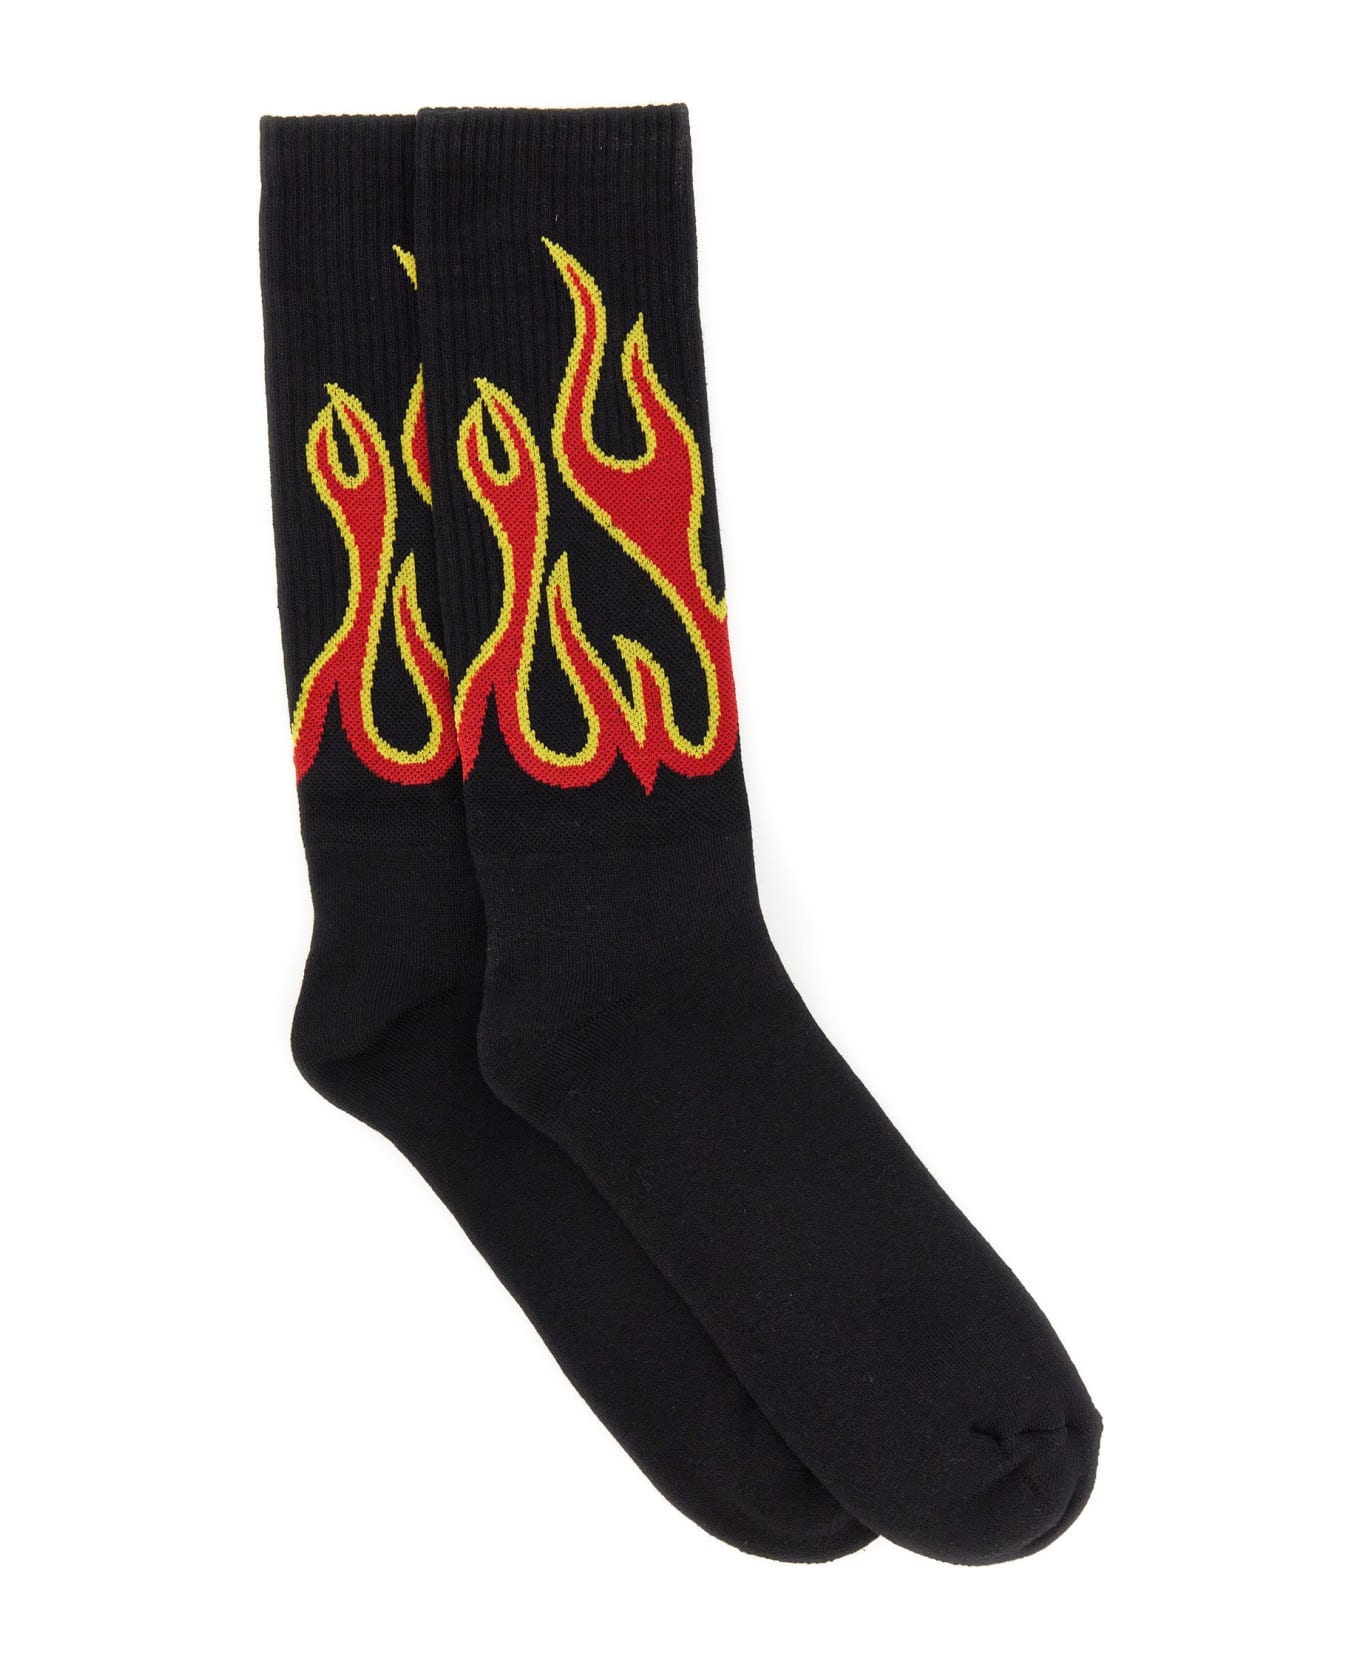 Palm Angels Burning Flames High Socks - NERO